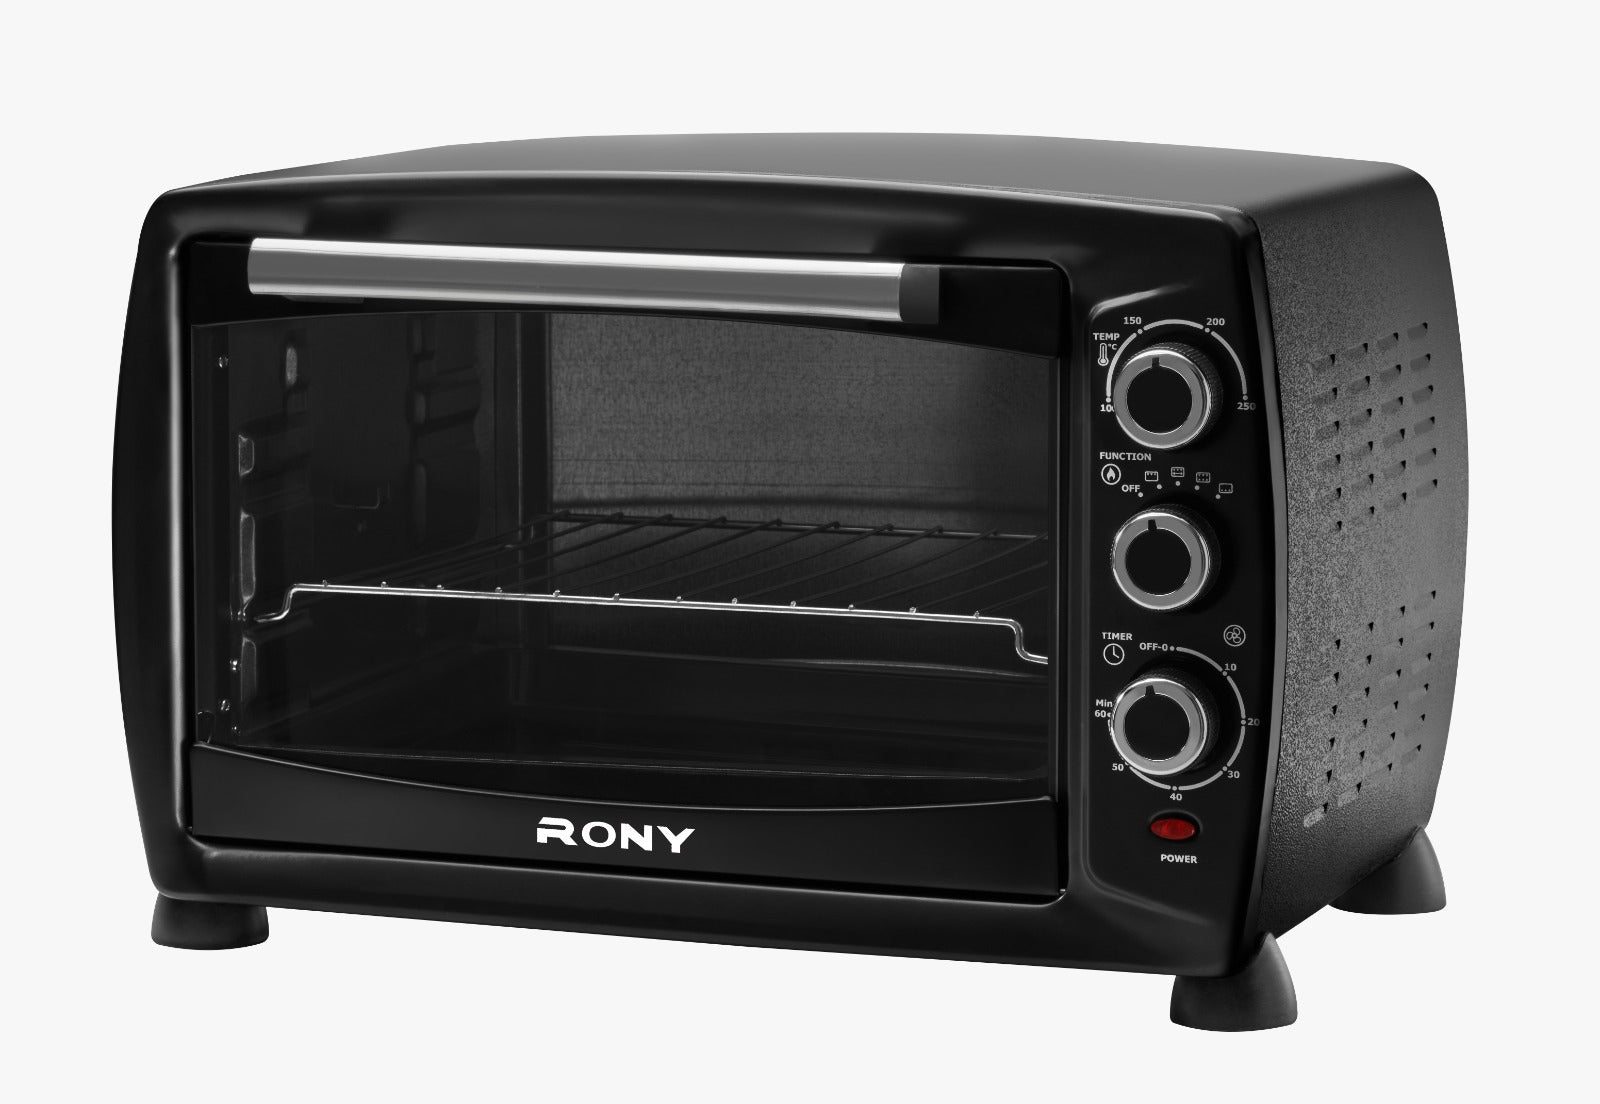 Rony Electric Oven 48 Liters grill - 2000 Watt - Black - RVL480V2W